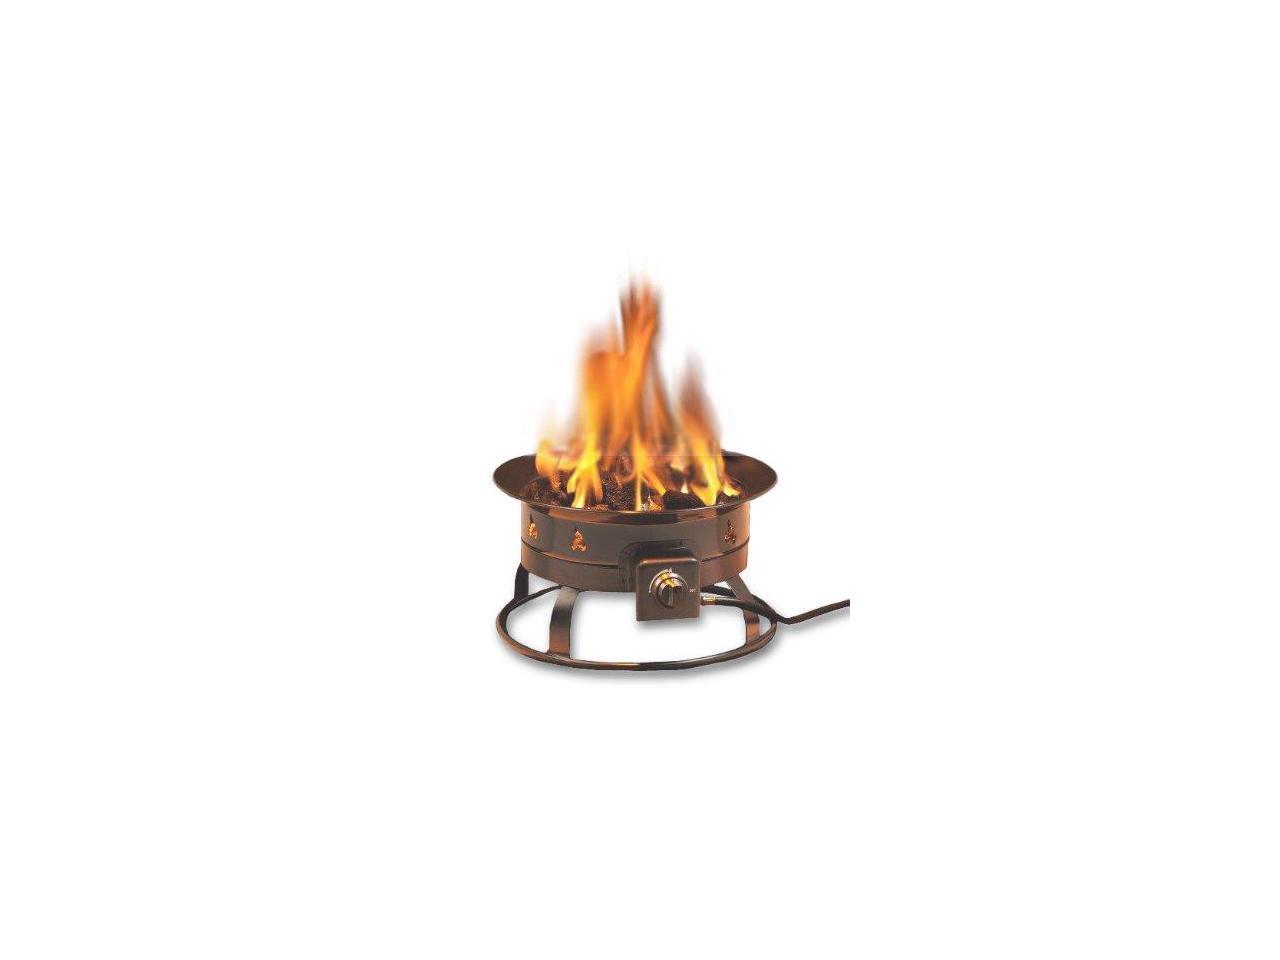 Portable Fire Pit By Destinationgear, Heininger 5995 58000 Btu Portable Propane Outdoor Fire Pit